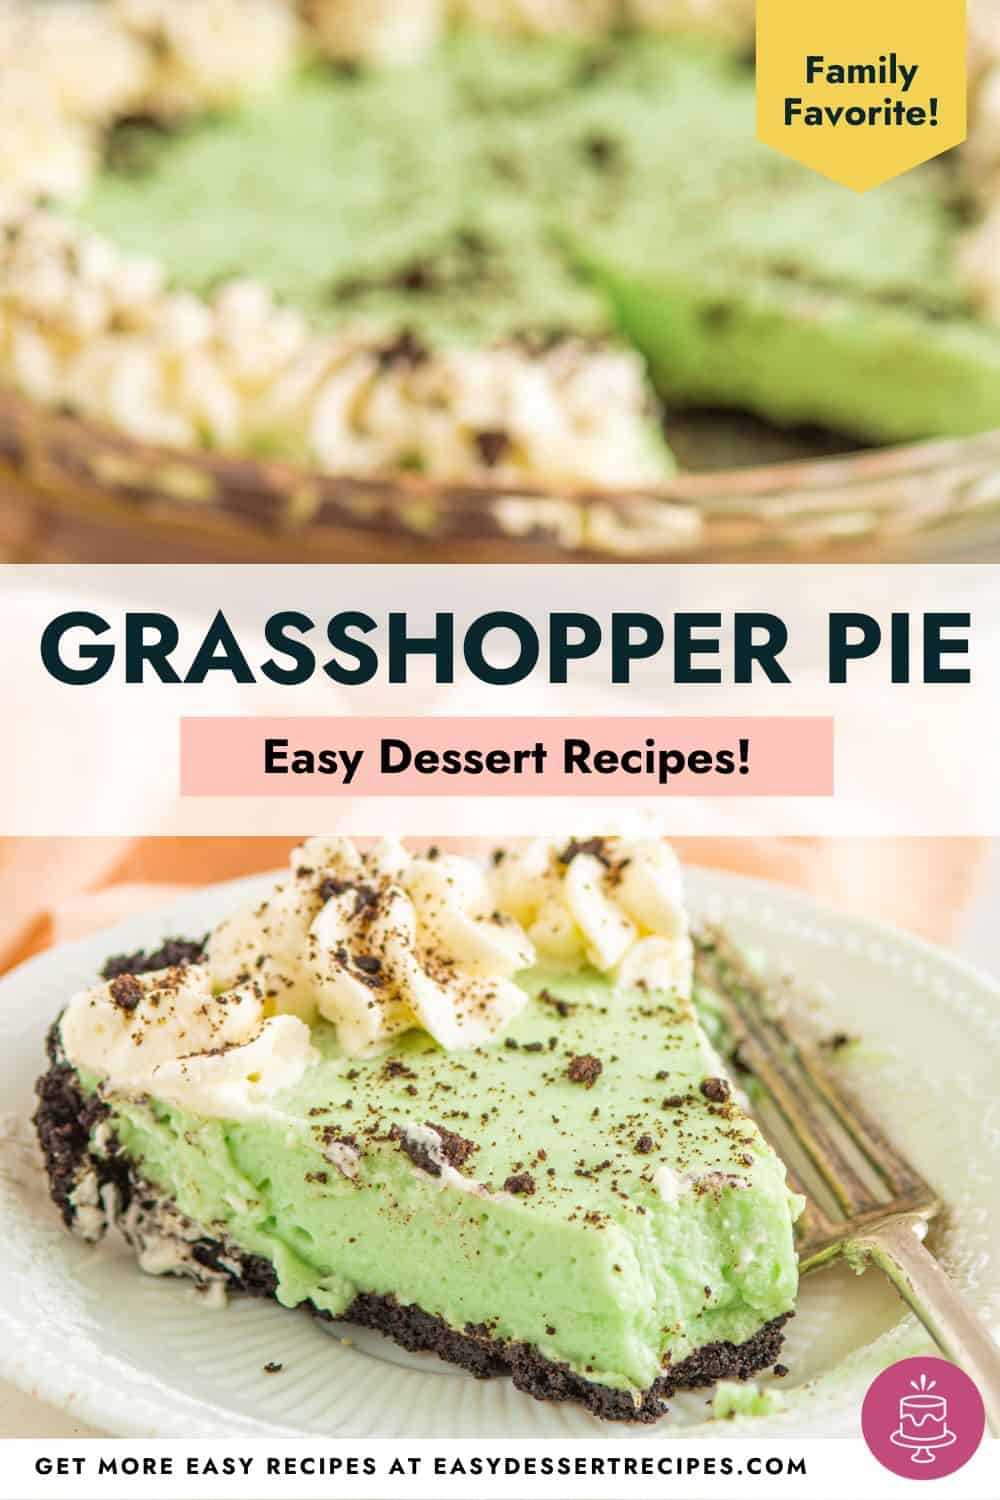 Grasshopper pie easy dessert recipes.